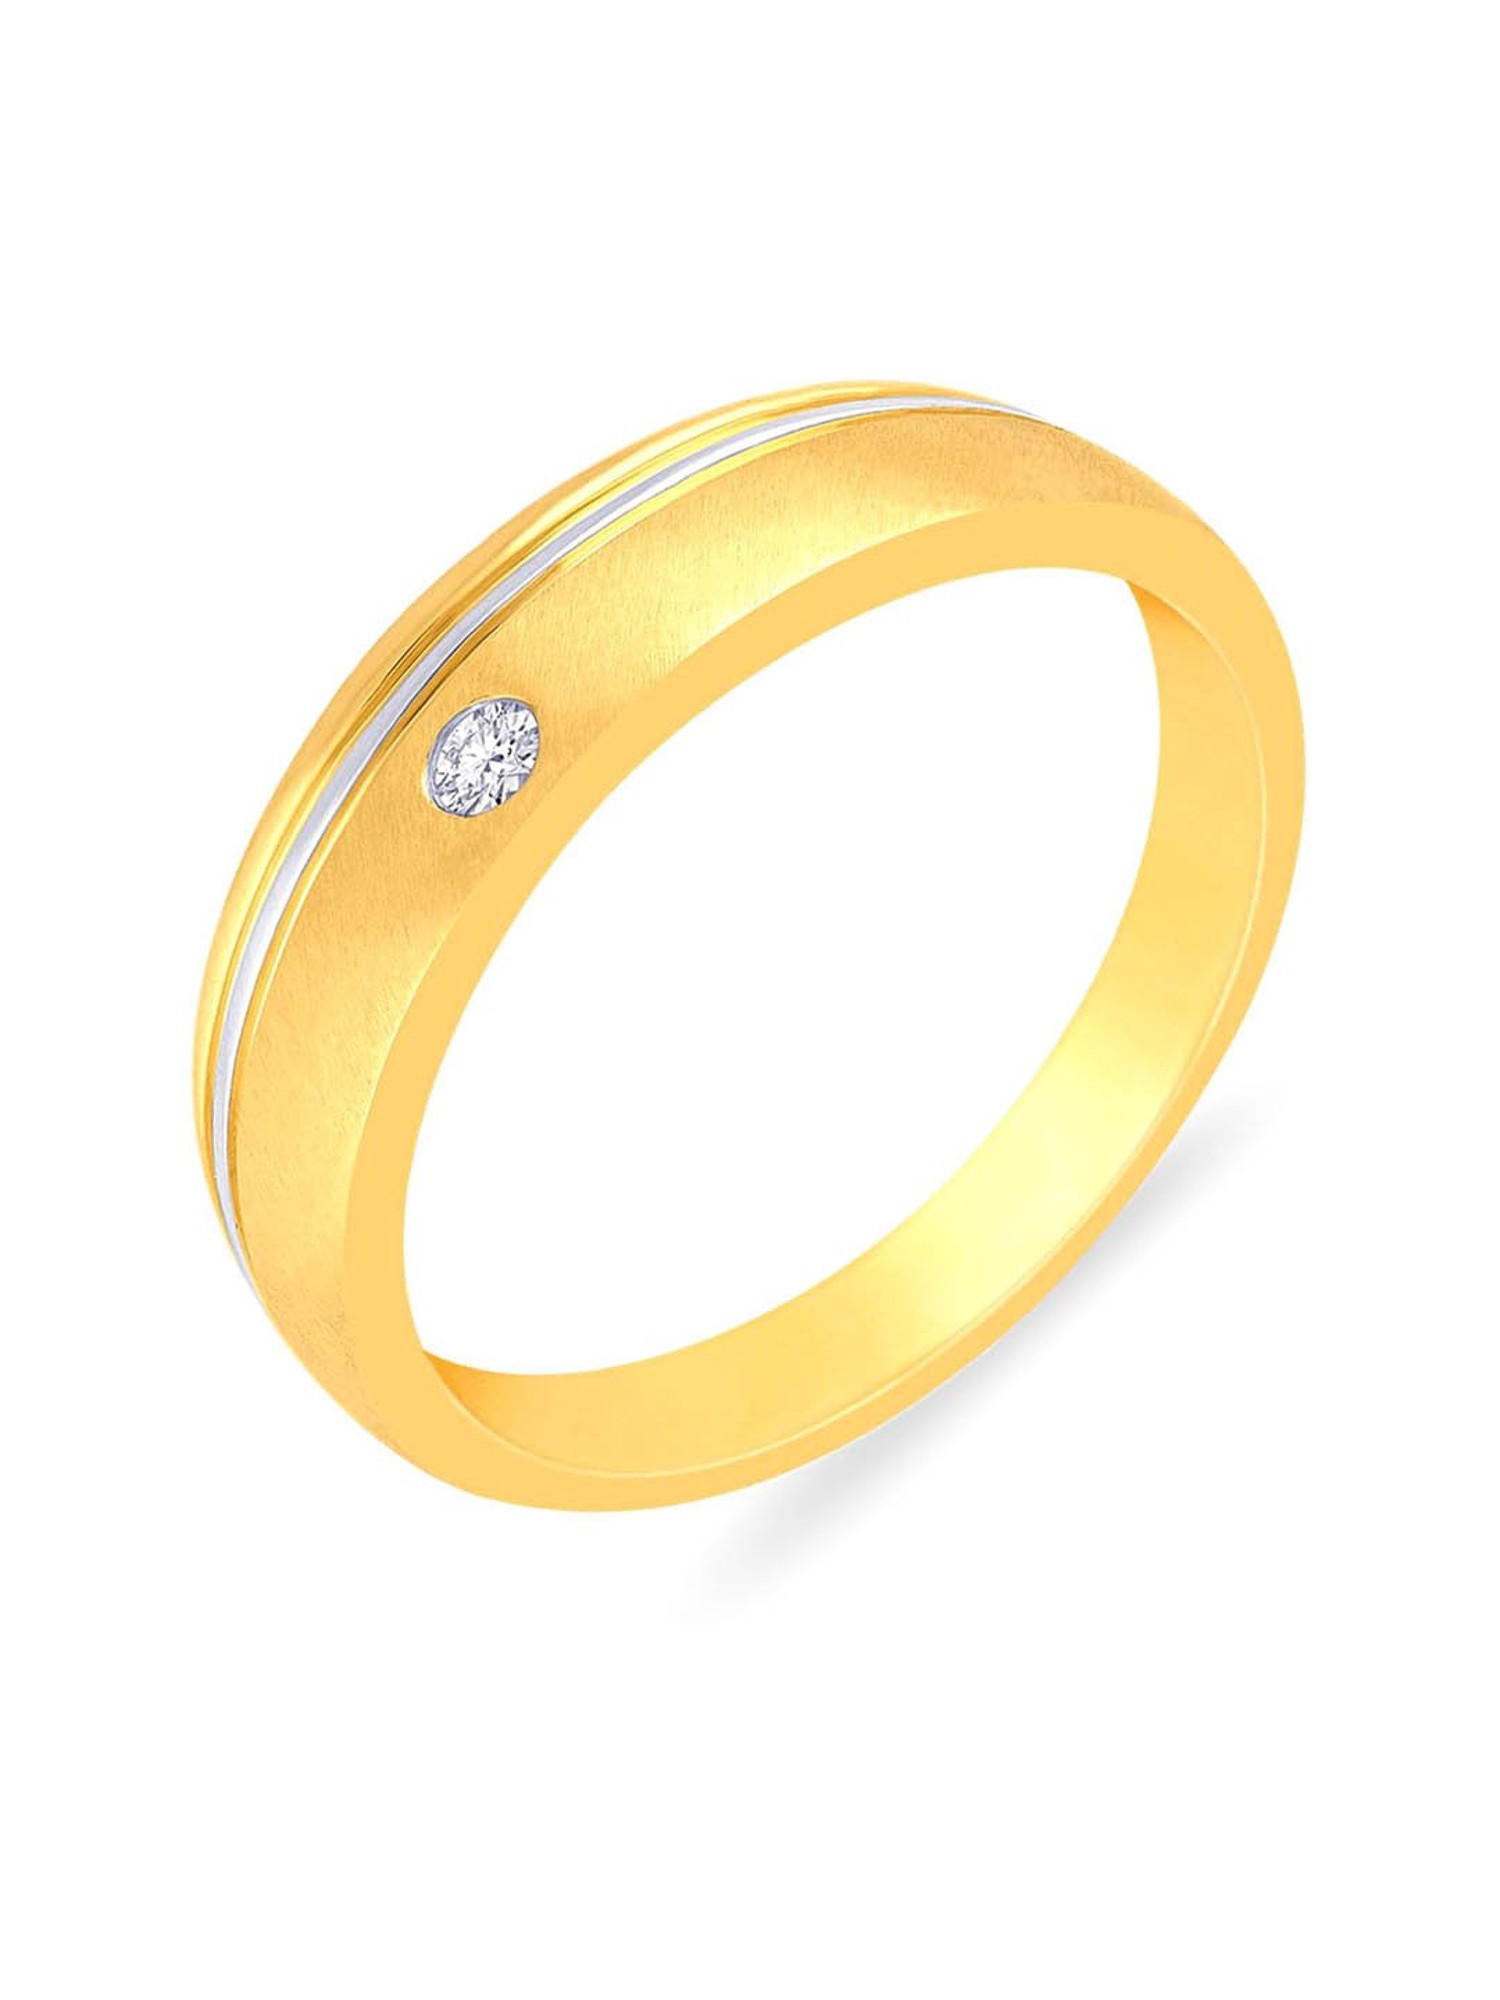 Gold Rectangle Signet Ring For Men or Women - Boutique Wear RENN